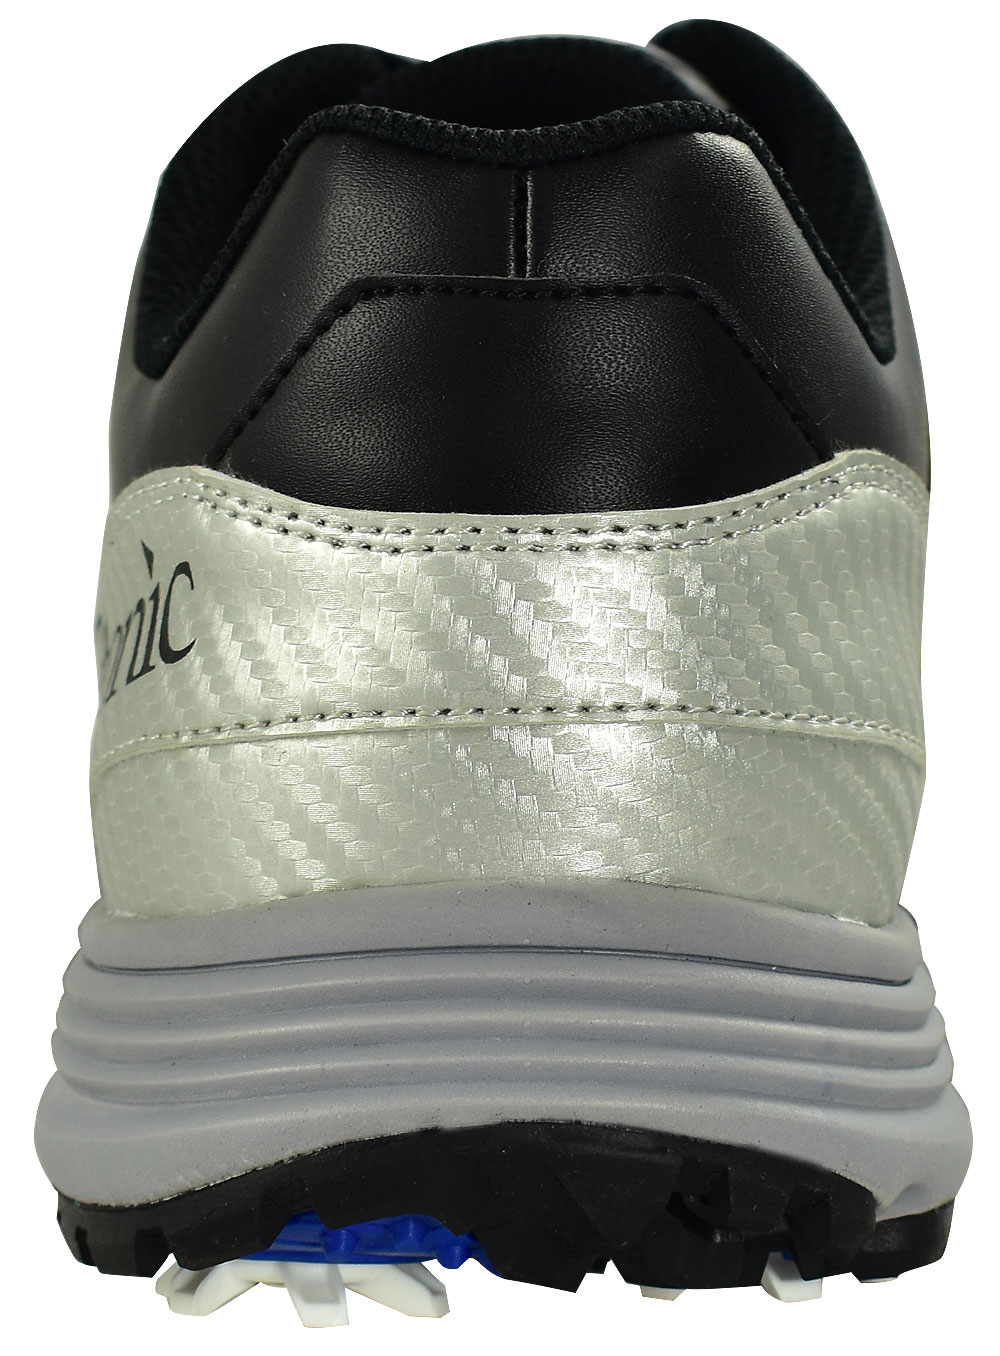 Etonic Men's Stabilizer Golf Shoes - image 2 of 5